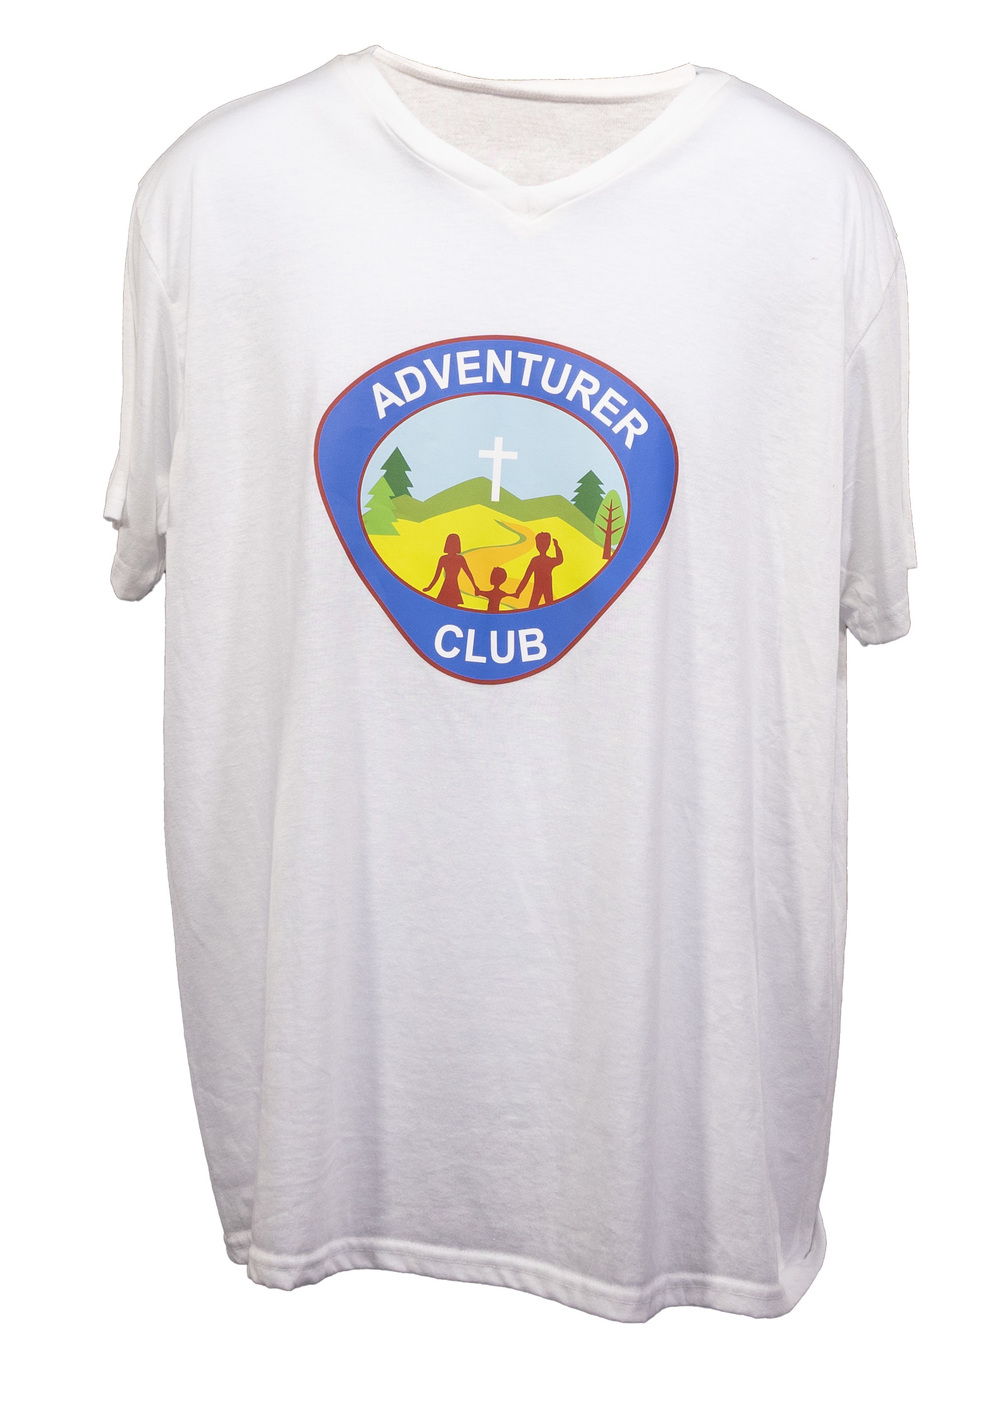 Adventurer T-shirt Iron-on